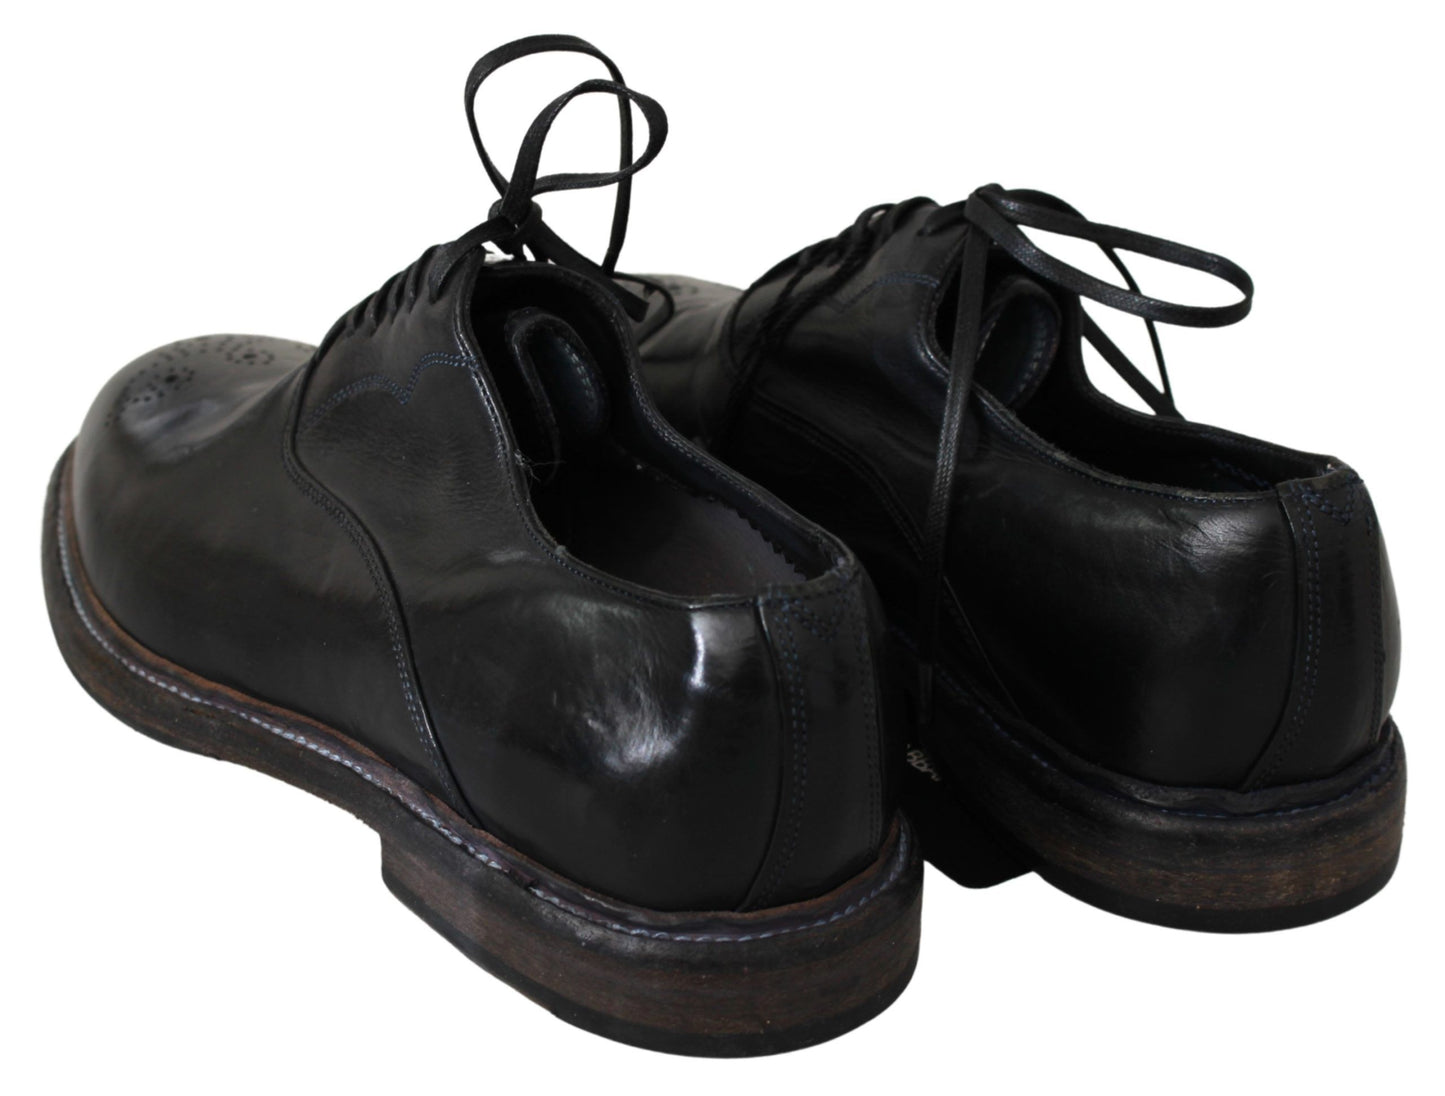 Black Leather Derby Dress Formal Shoes